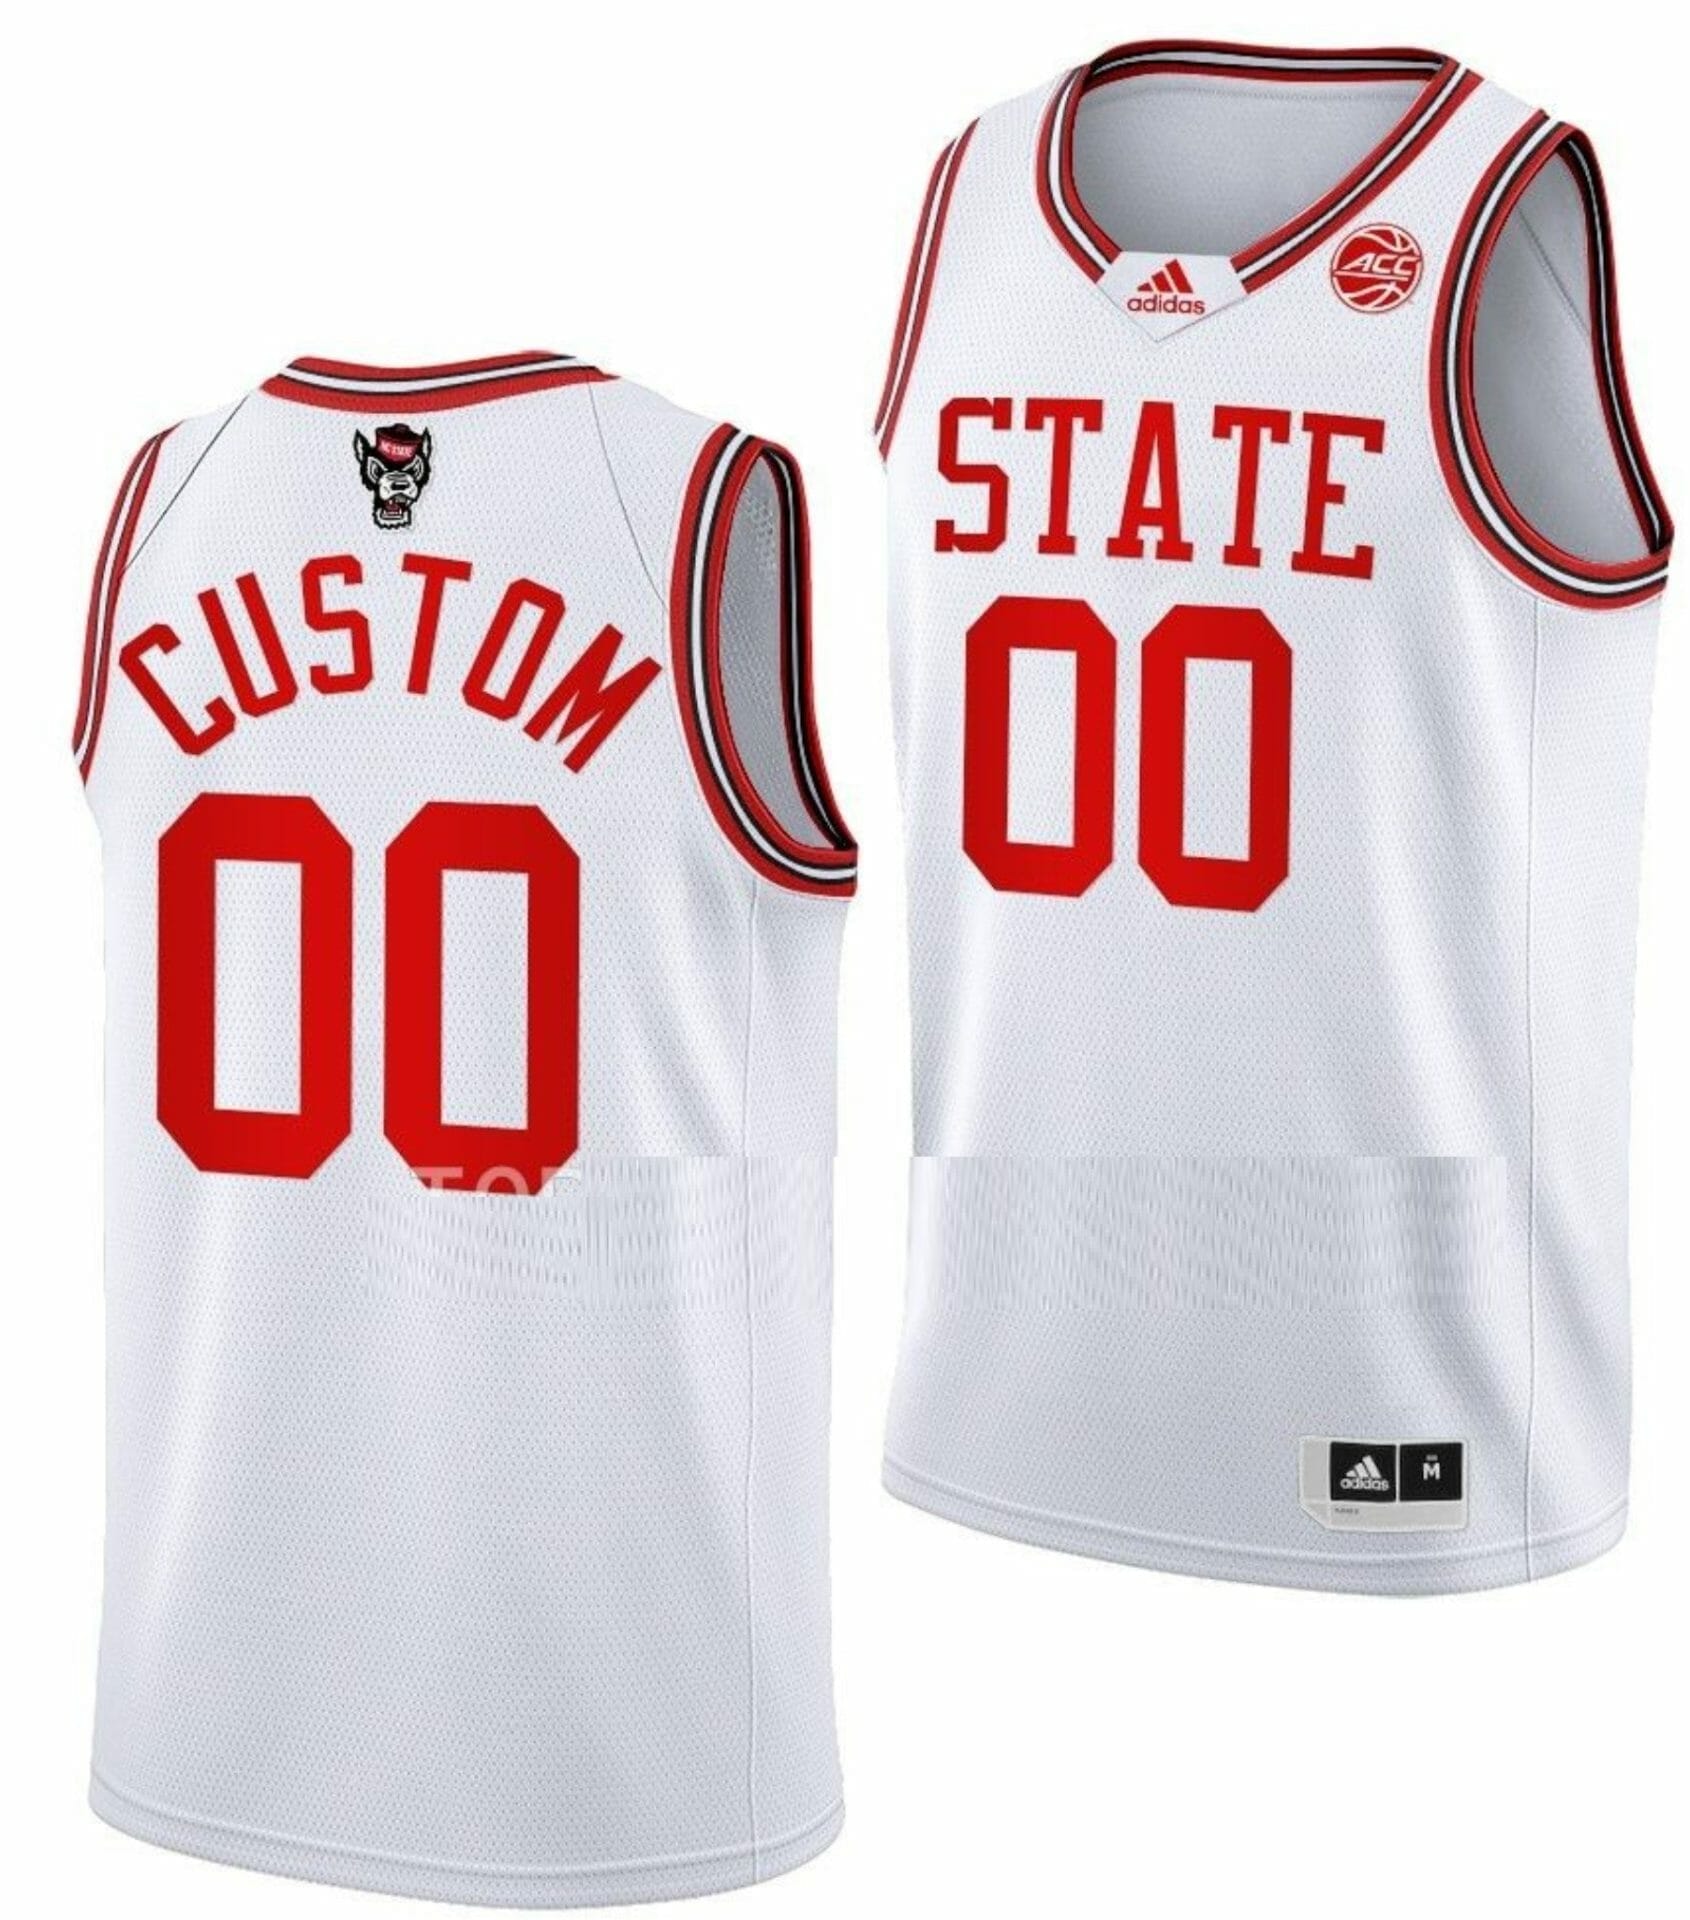 Custom Louisville Cardinals Jersey Name and Number Customizable College Basketball Jerseys Swingman Red